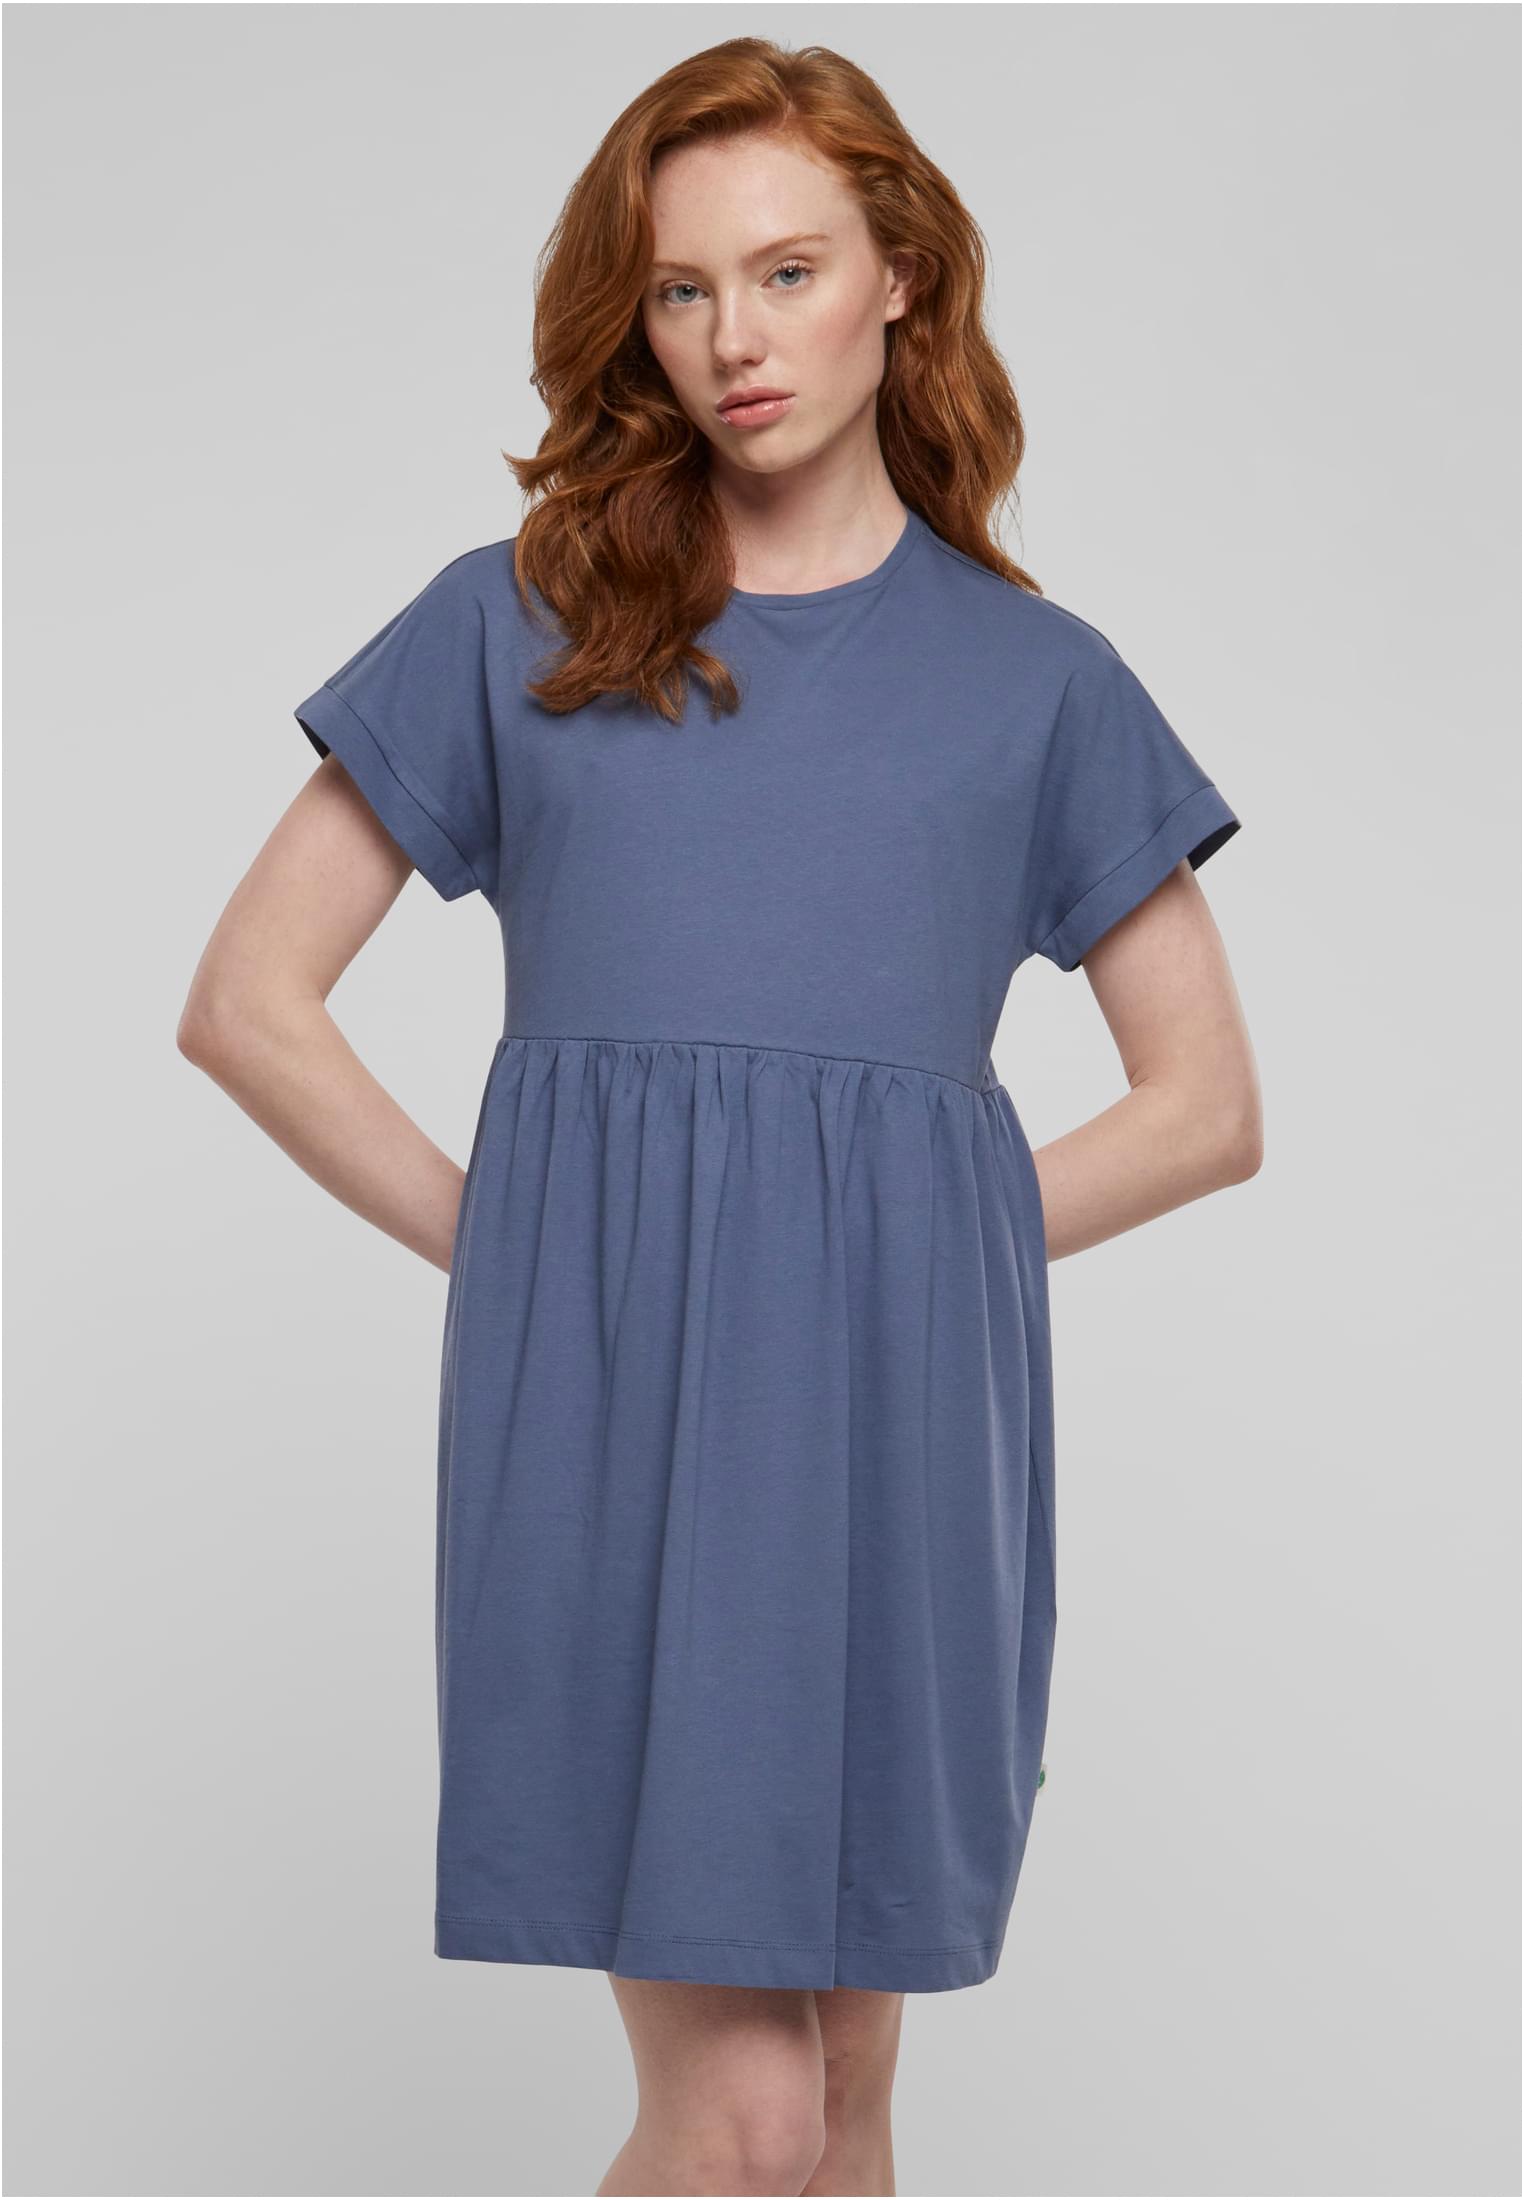 Women's Organic Empire Valance Tee Dress - Blue